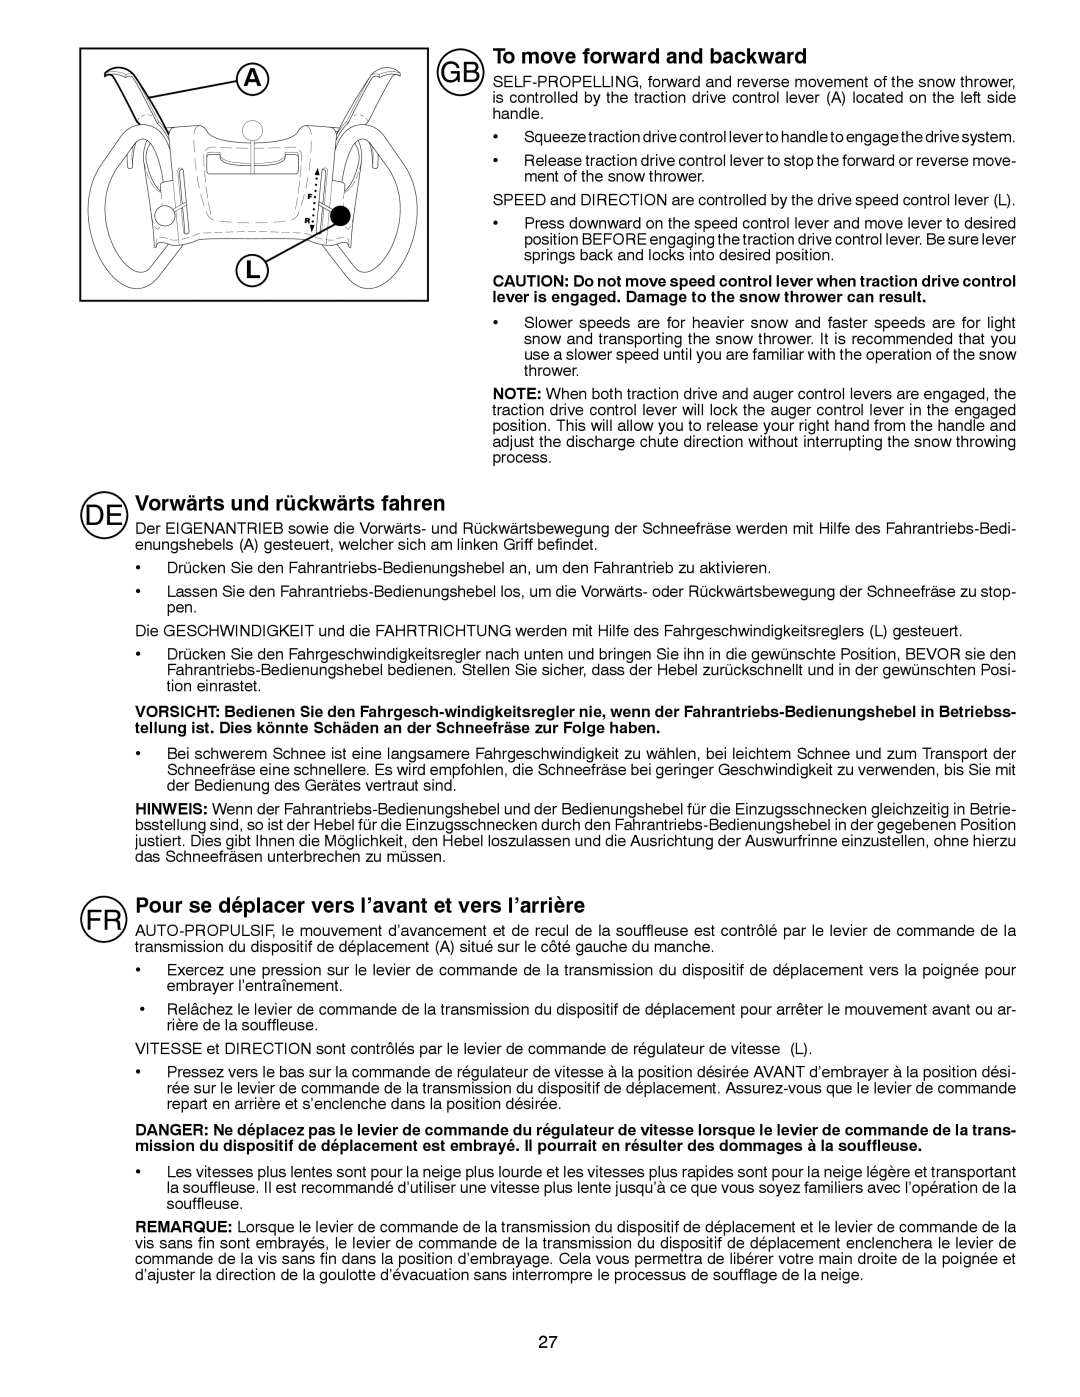 Husqvarna ST 276EP instruction manual To move forward and backward, Vorwärts und rückwärts fahren 